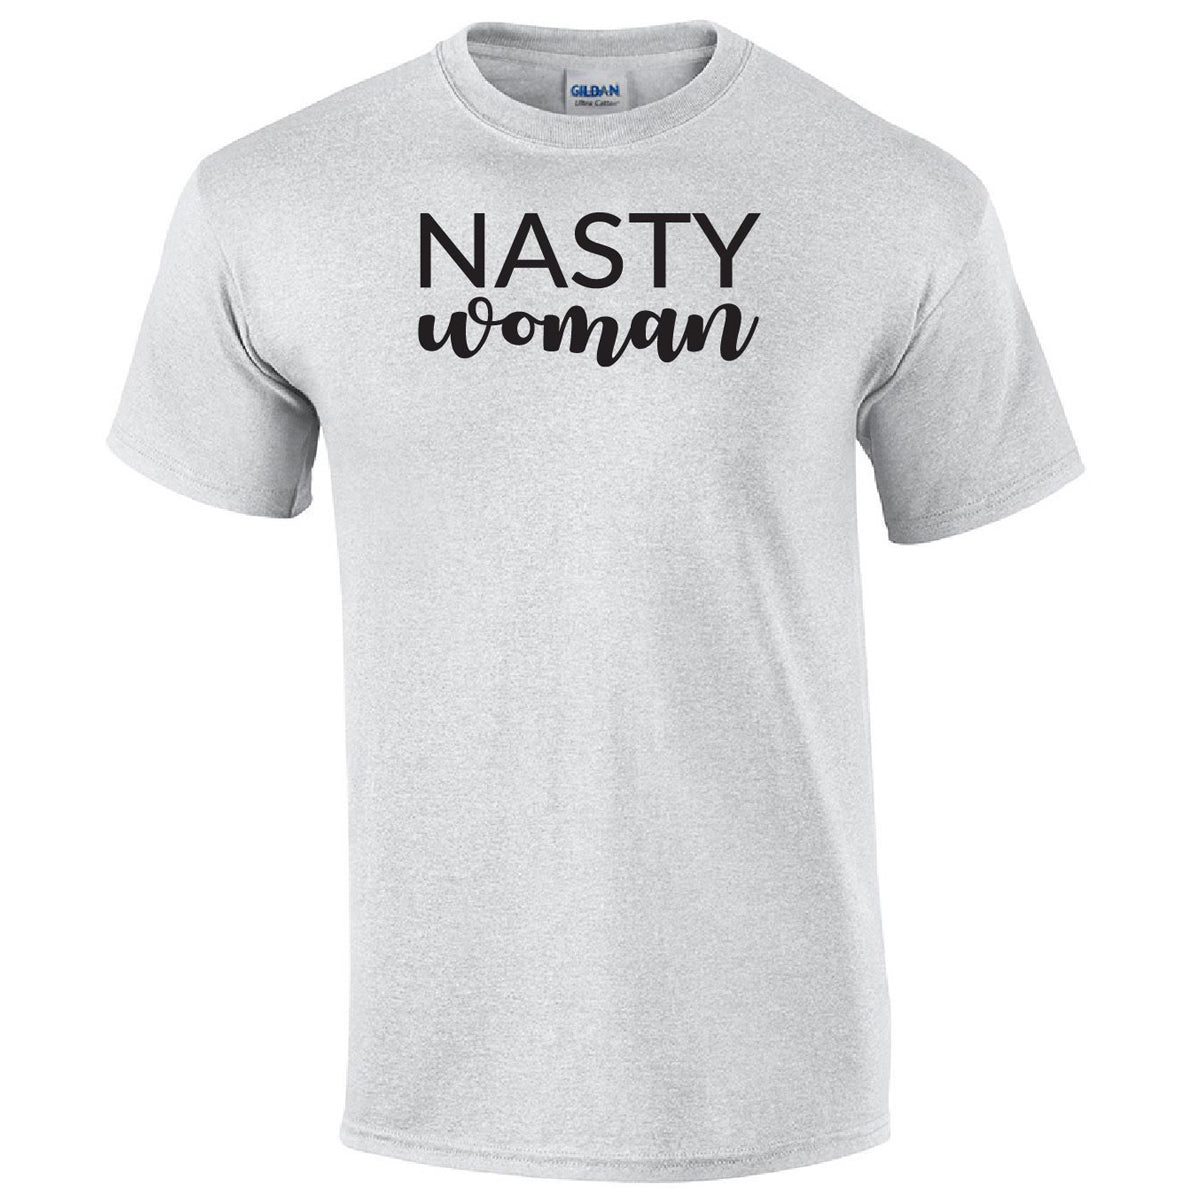 Nasty Woman Printed Tee Humorous Shirt 411 Youth Medium Ash Youth